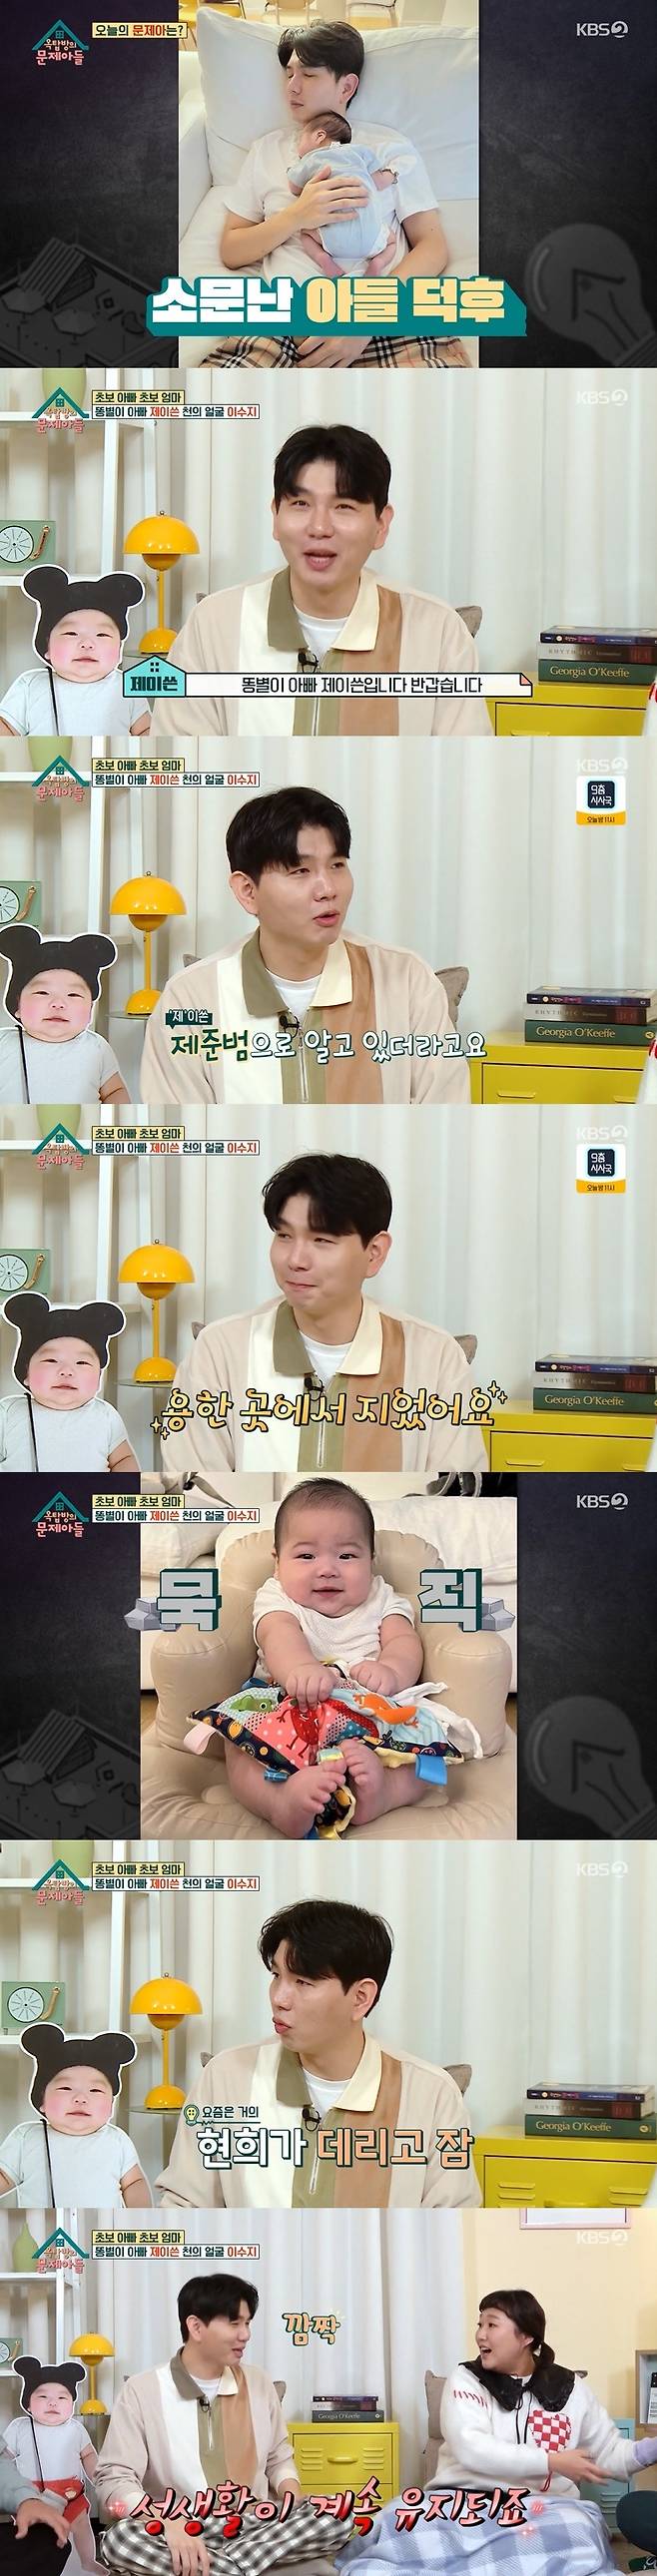 KBS 2TV '옥탑방의 문제아들' 캡처